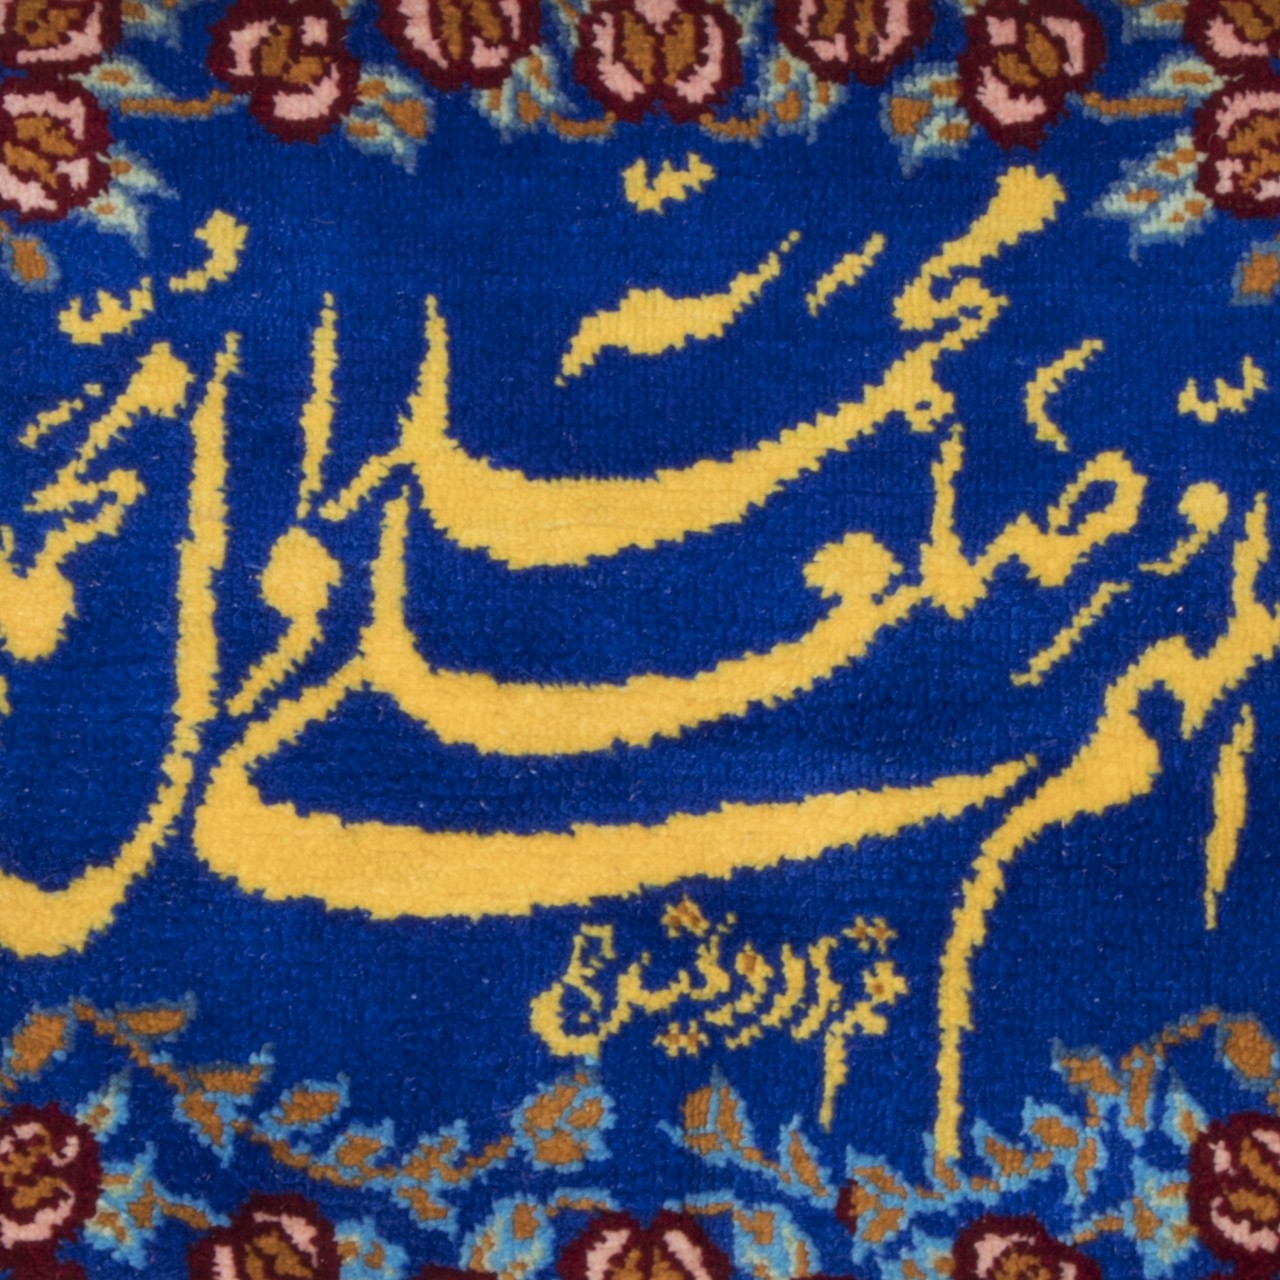 Pictorial Tabriz Carpet Ref: 901615